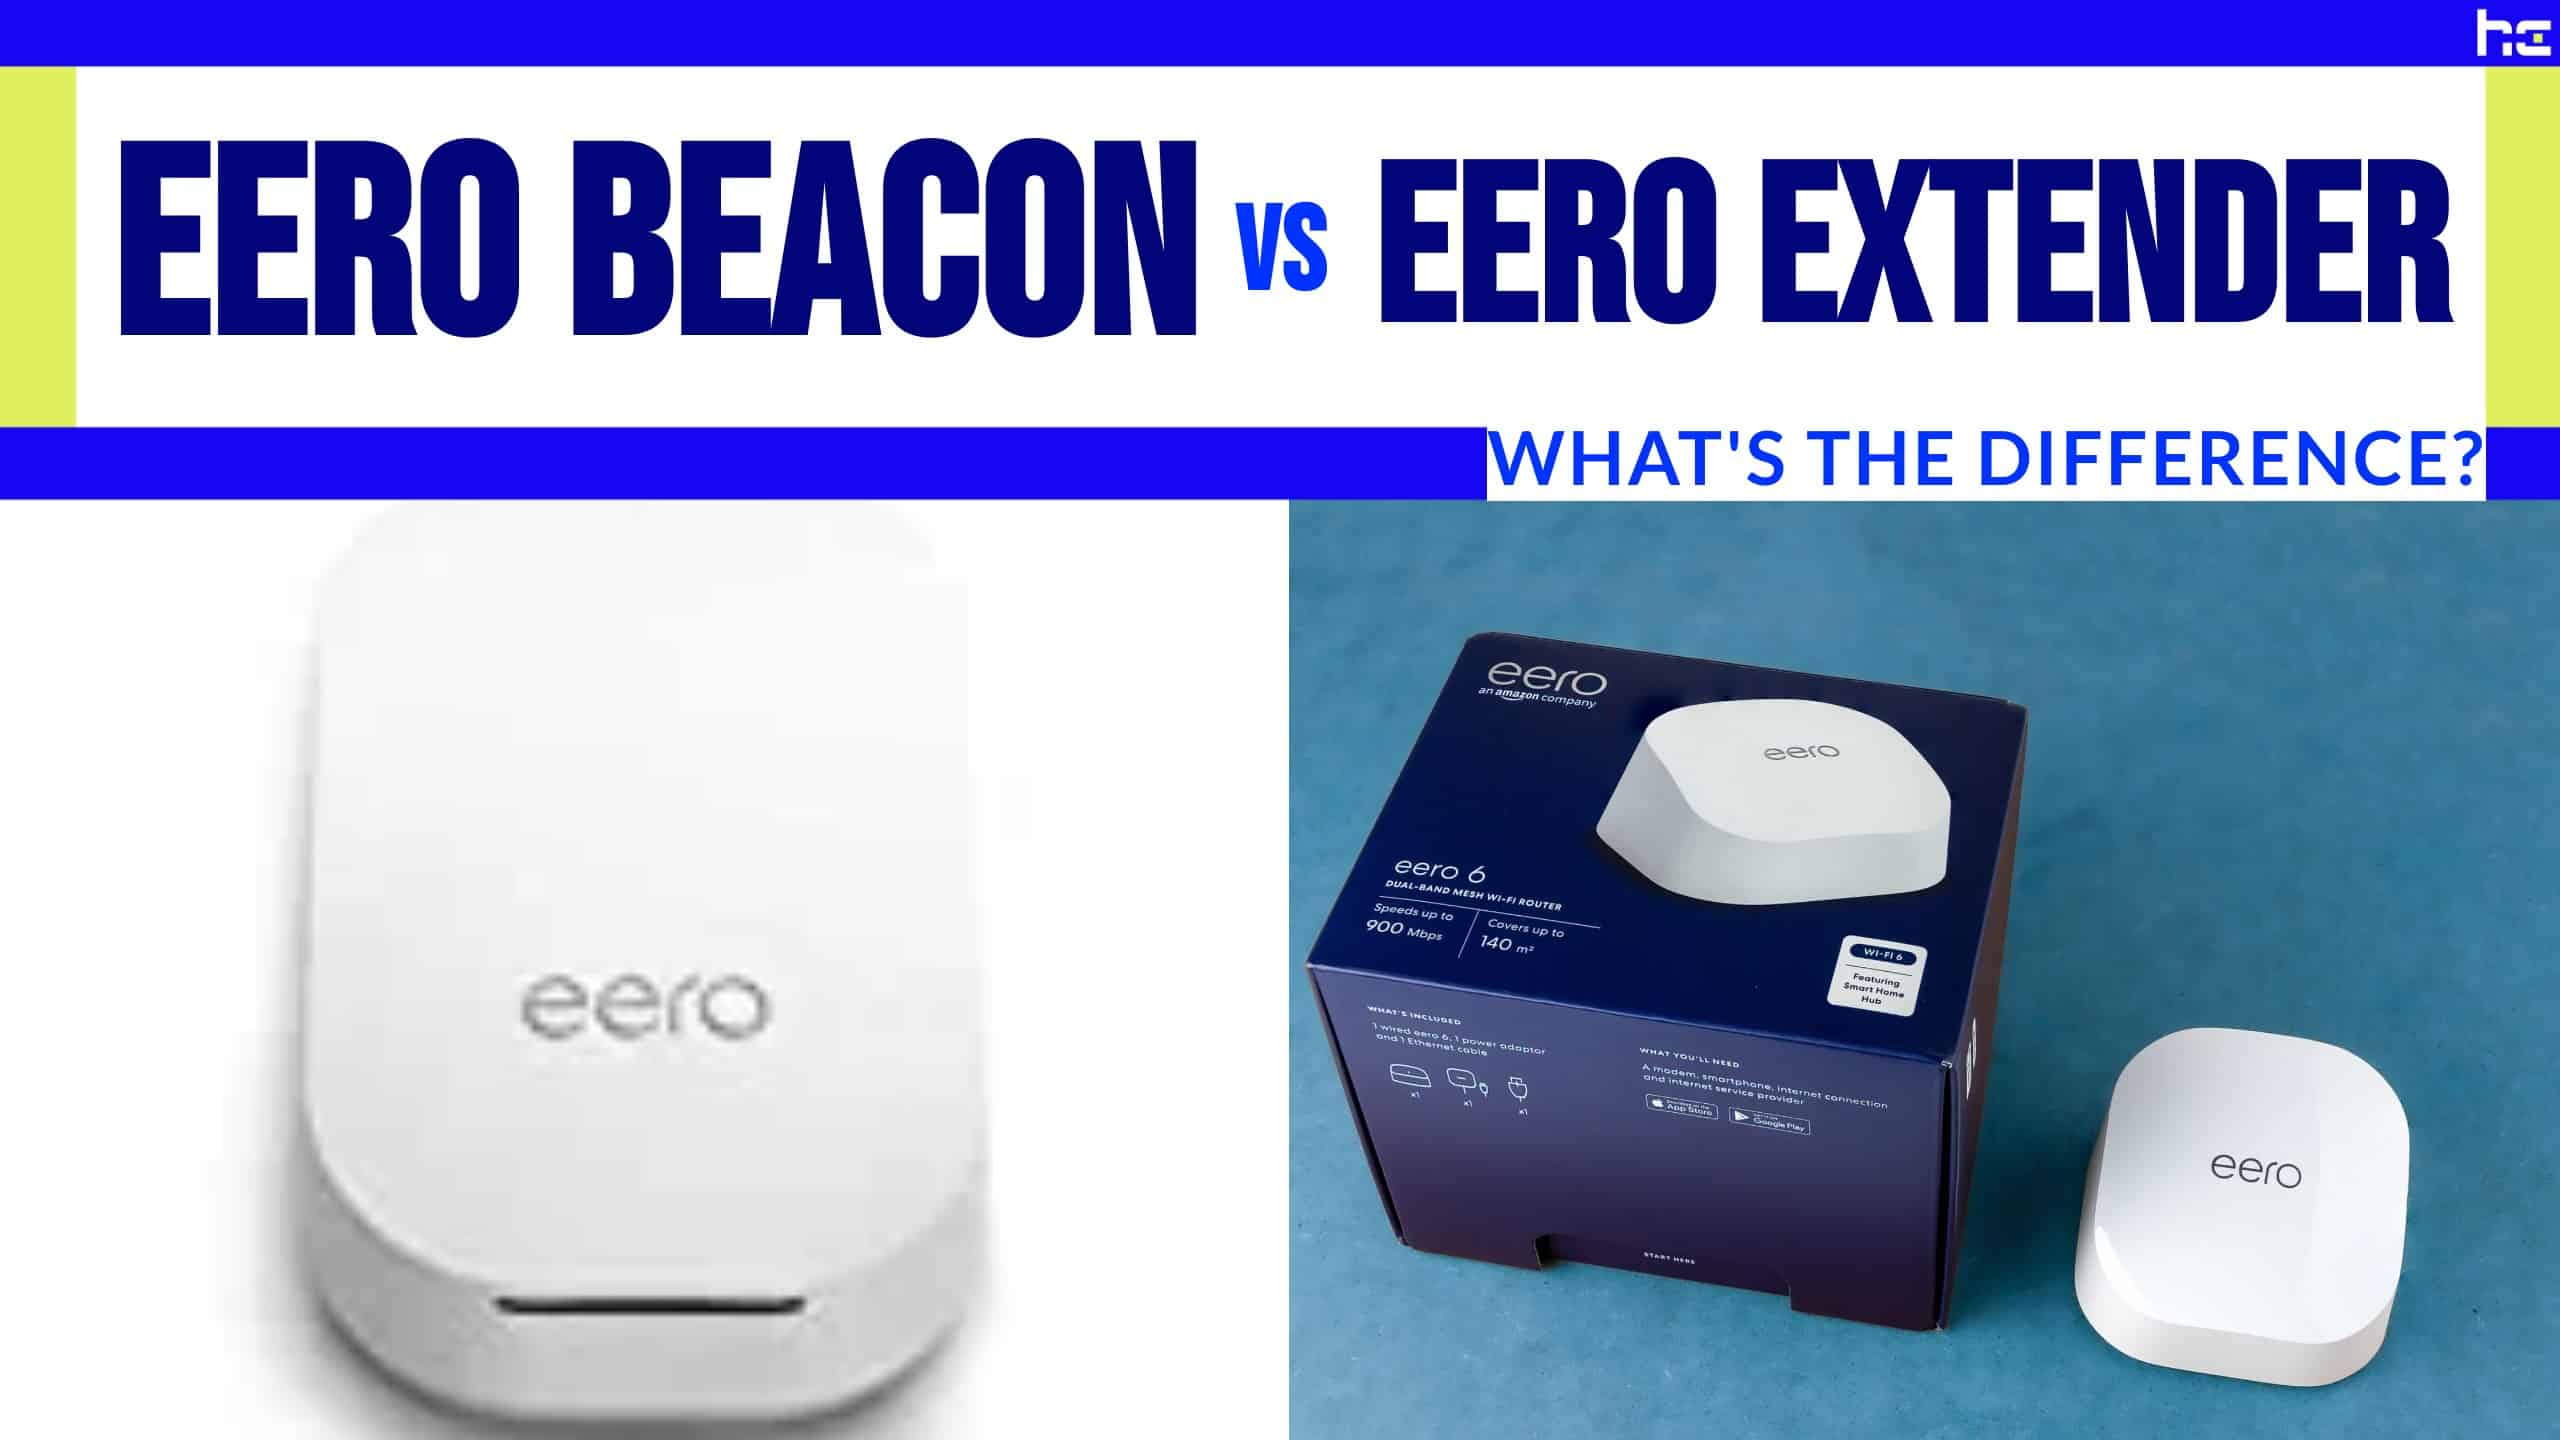 eero Beacon vs eero Extender feature image